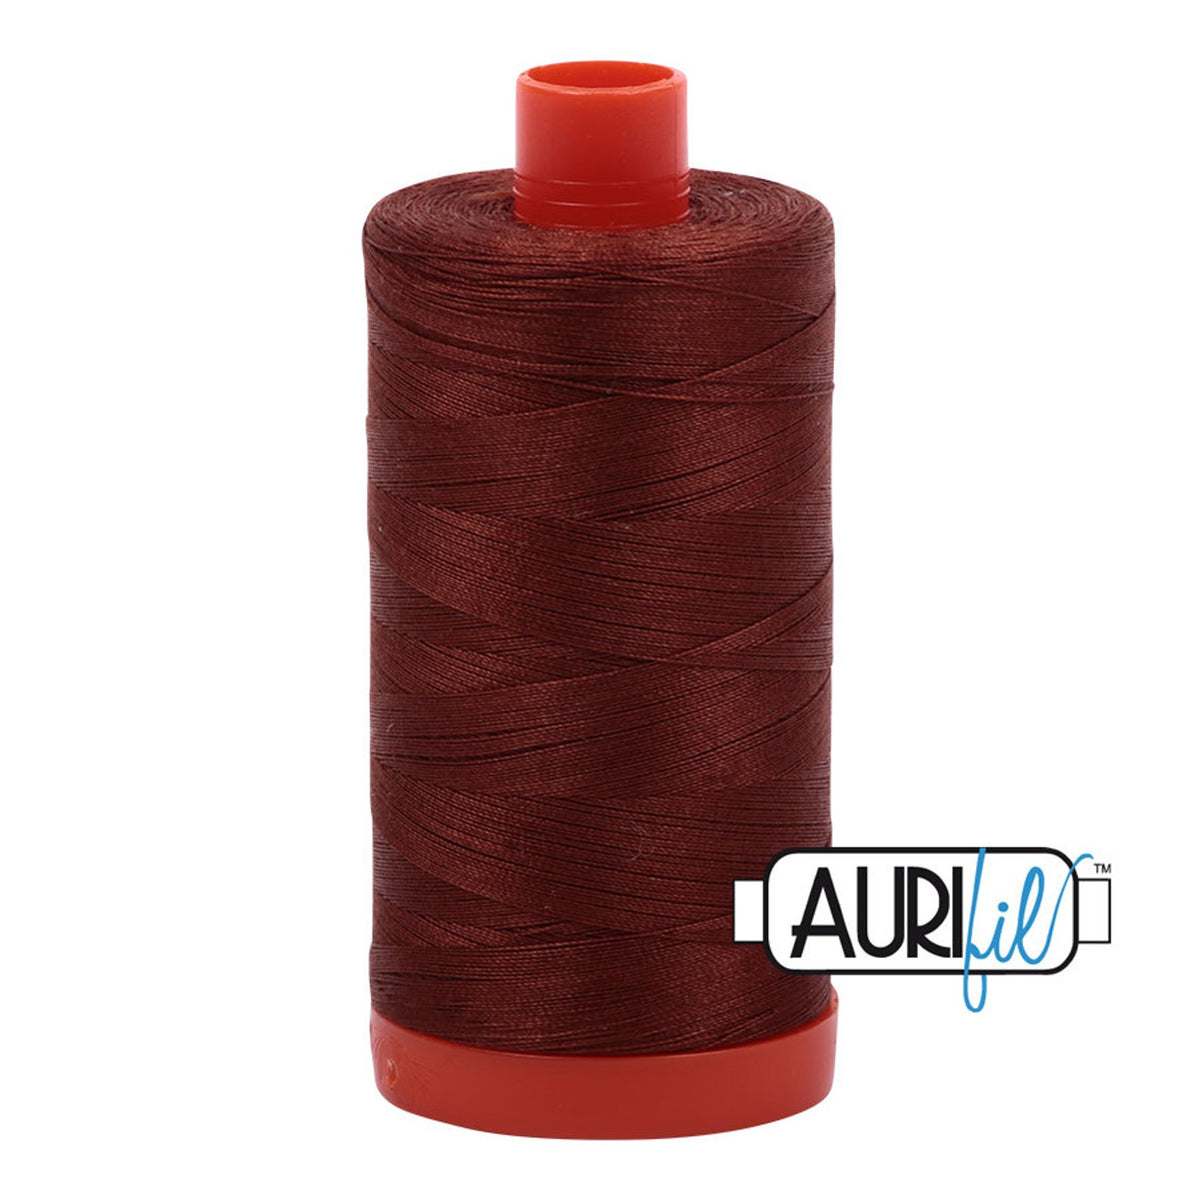 Aurifil 50 wt cotton thread, 1300m, Copper Brown (4012)